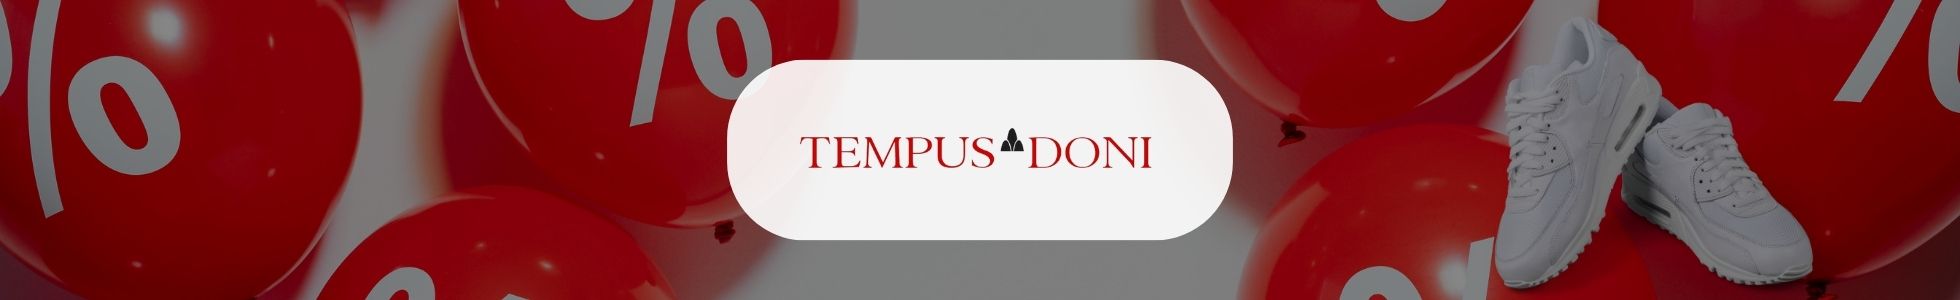 Tempus Doni - shop online calzature